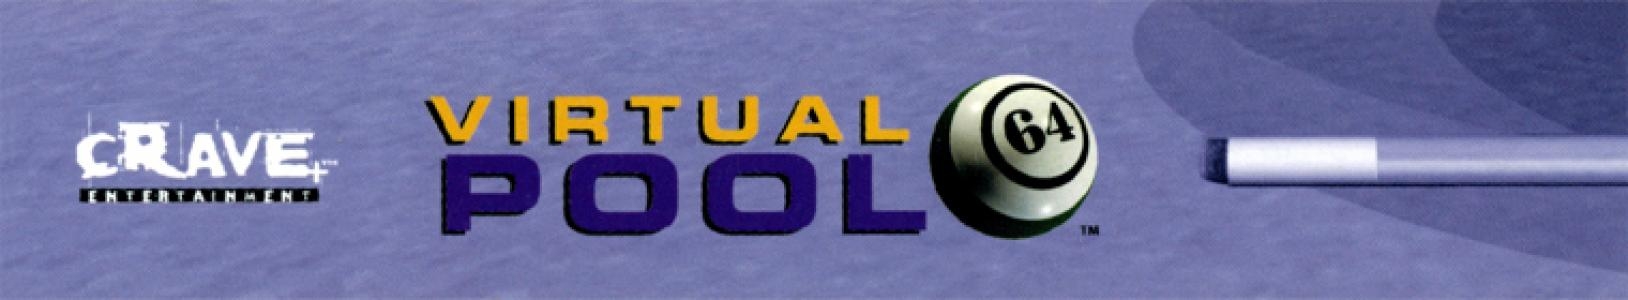 Virtual Pool 64 banner